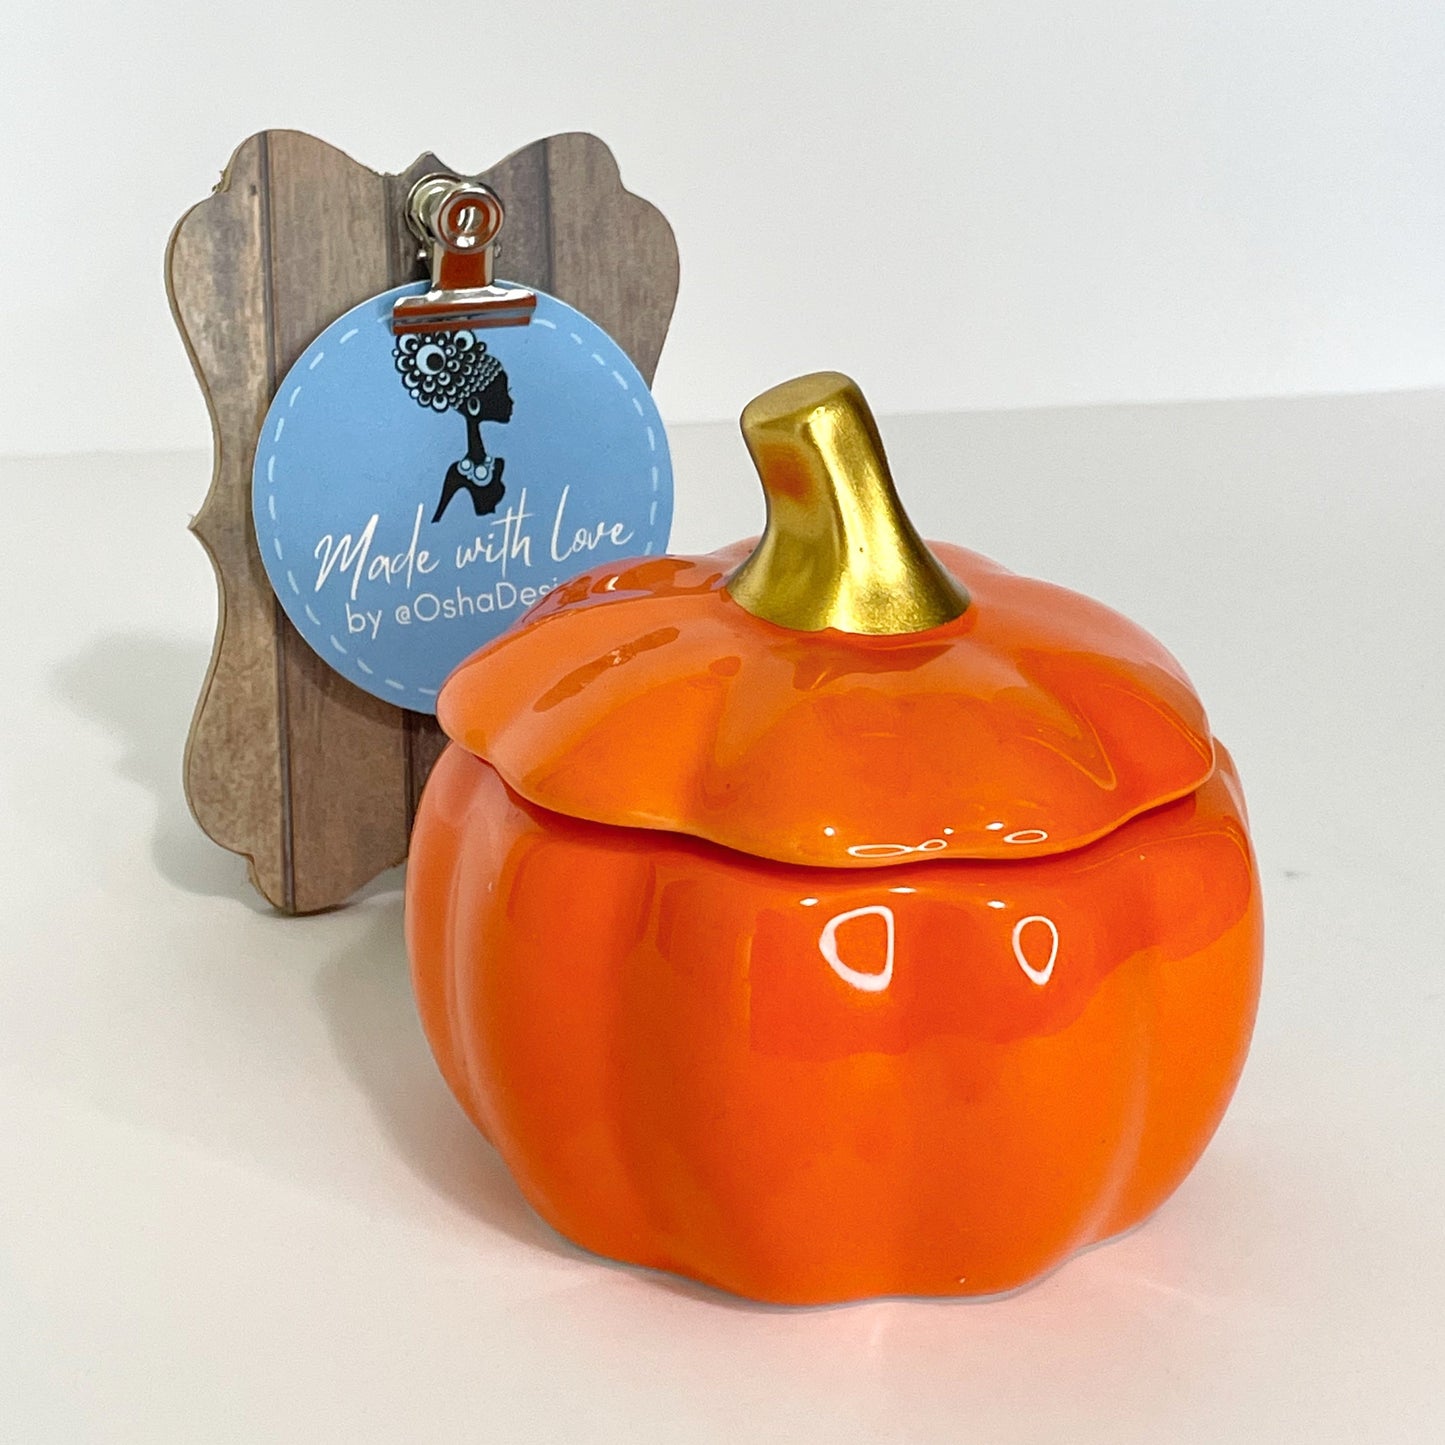 Pumpkin Patch Soy Candle in Ceramic Jar | Joy Lane Farm